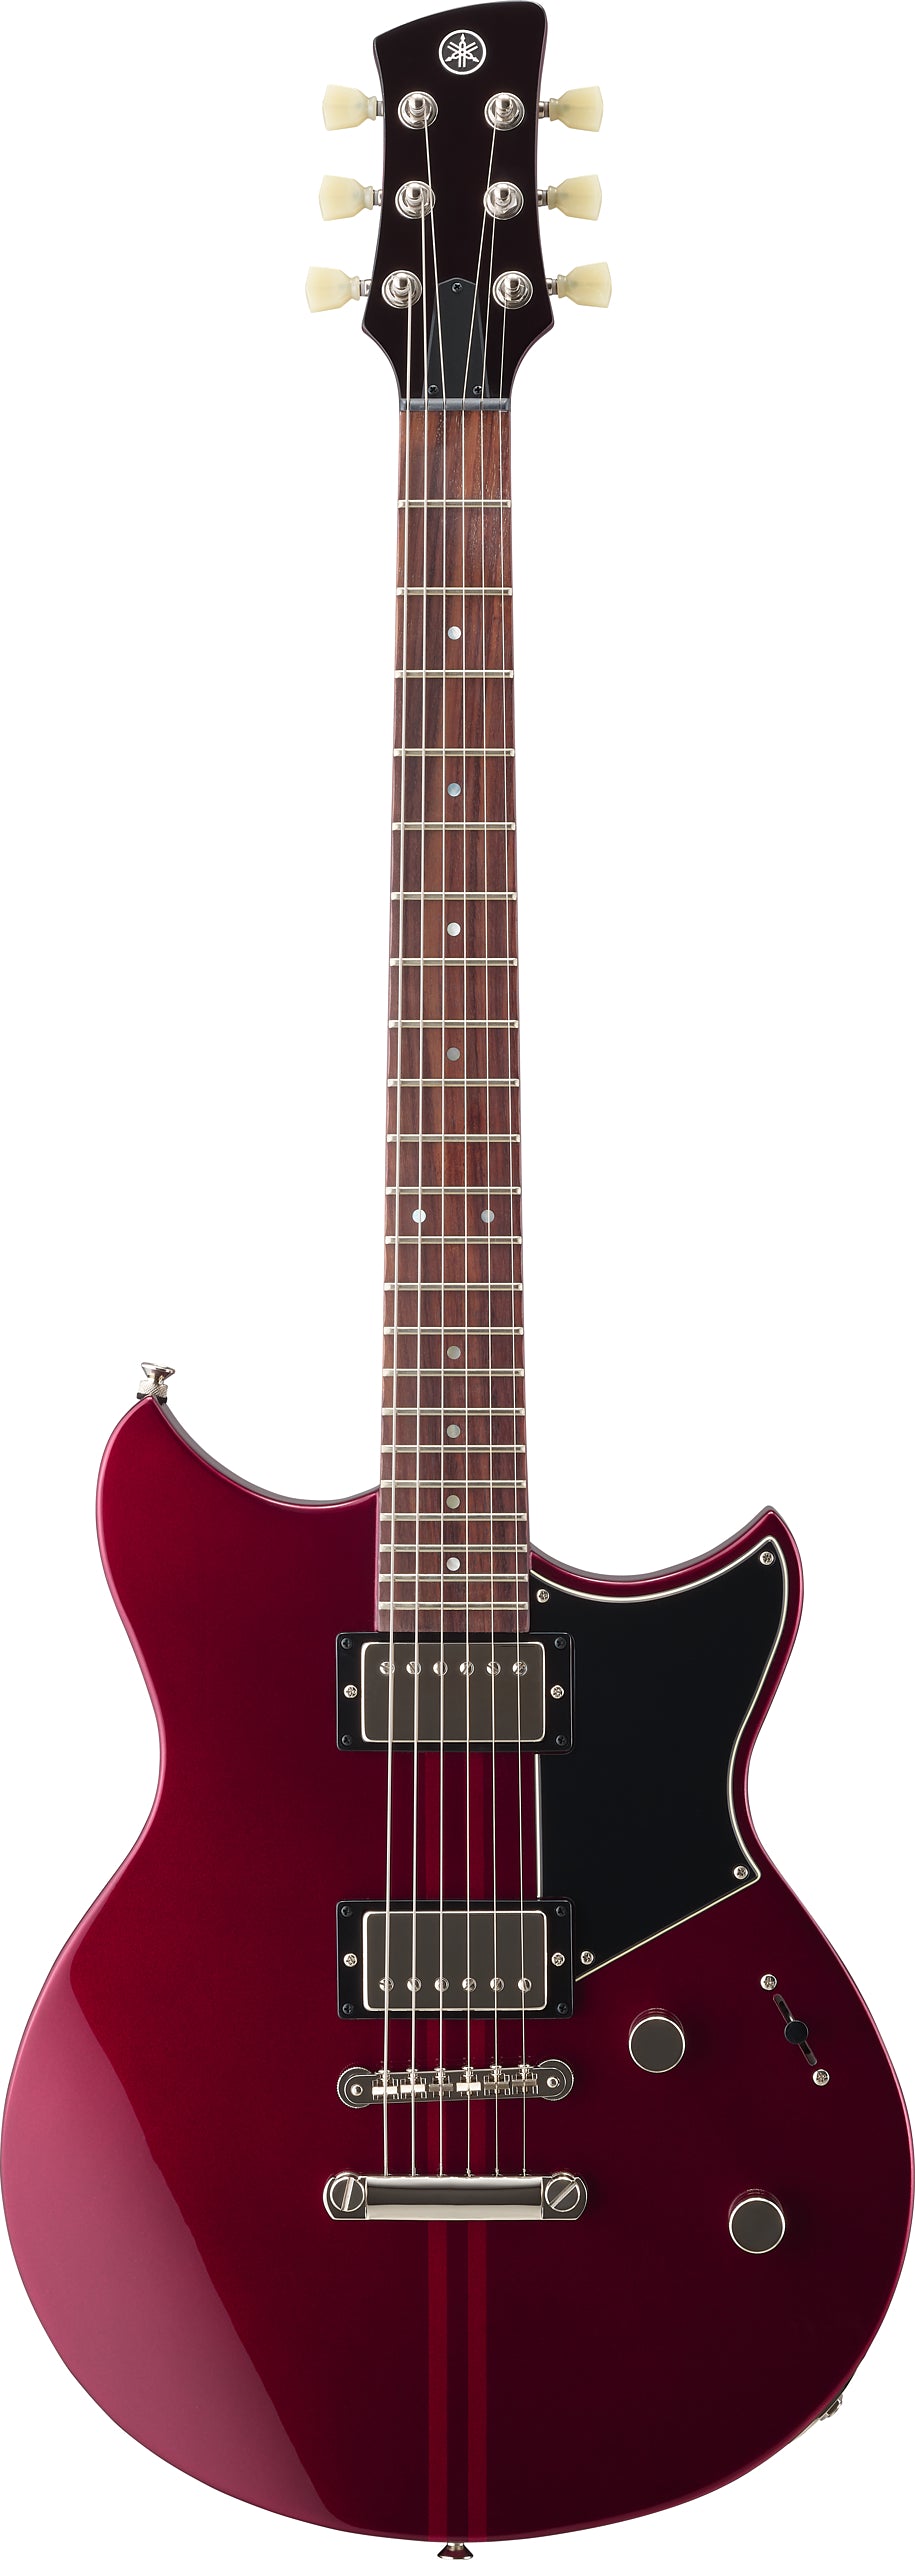 Yamaha Revstar II RSE20 Element Electric Guitar